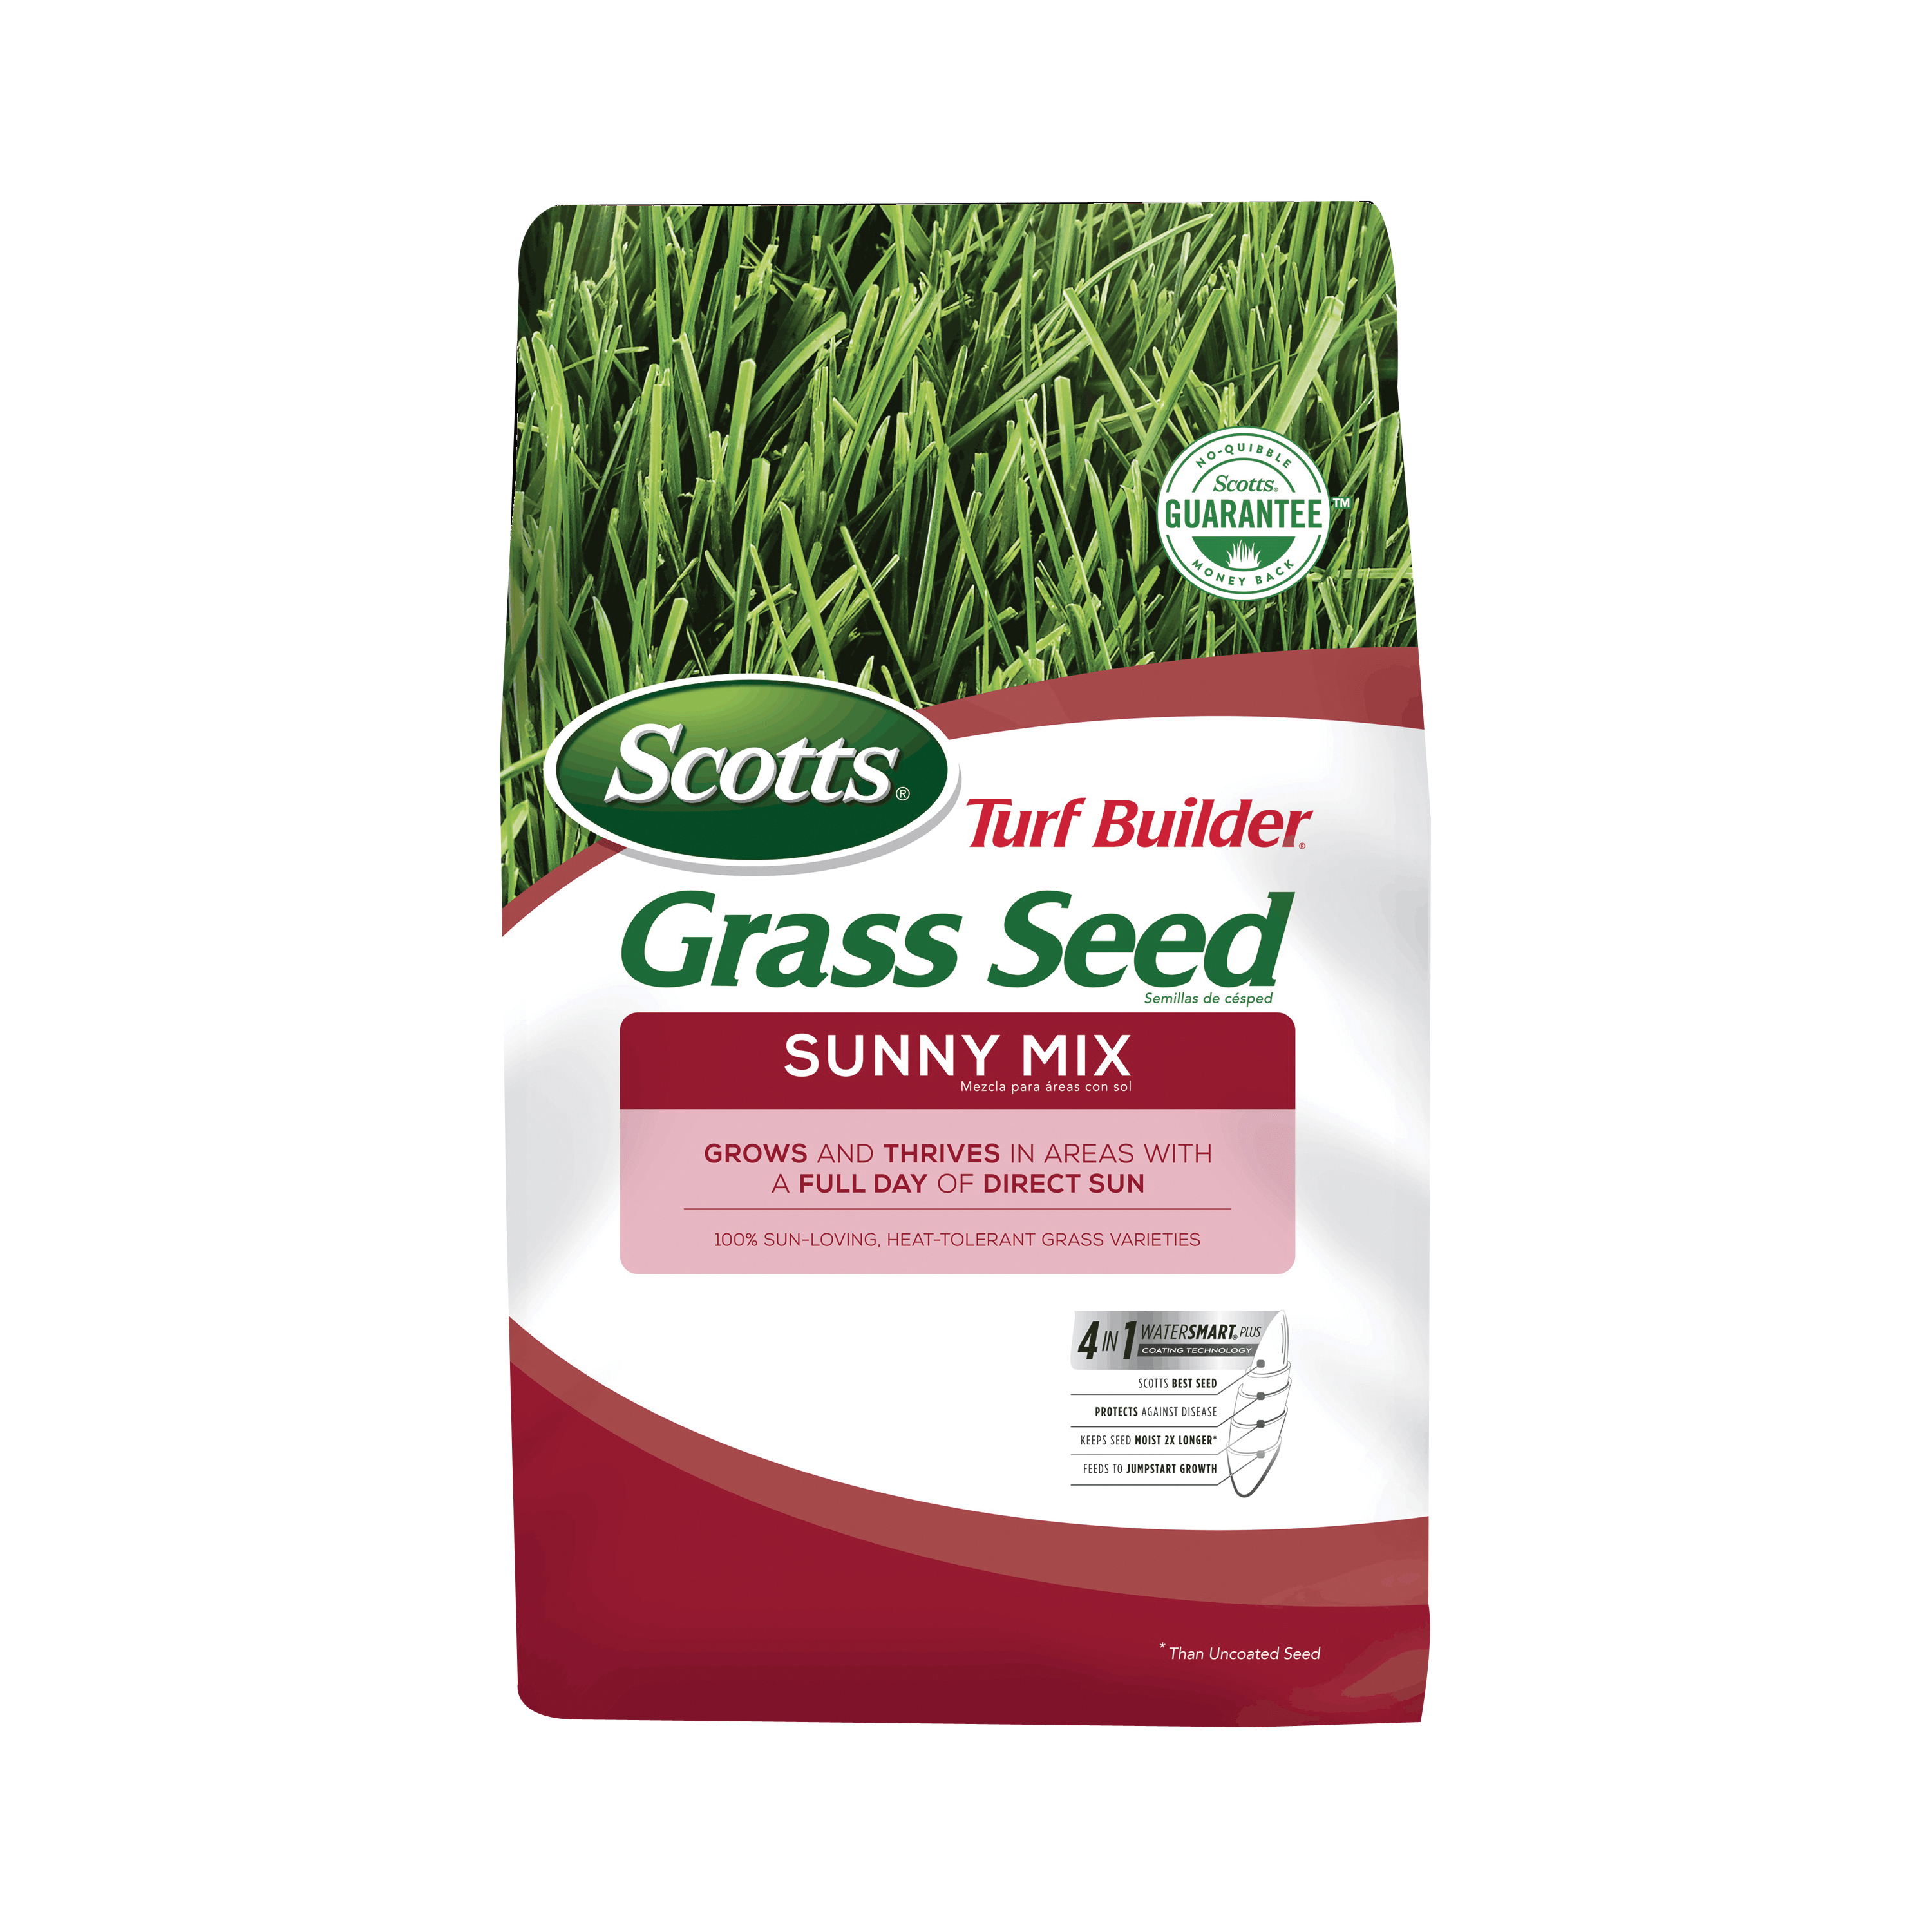 Scotts Turf Builder 18035 4-0-0 Grass Seed, Sunny Mix, 2.4 lb Bag